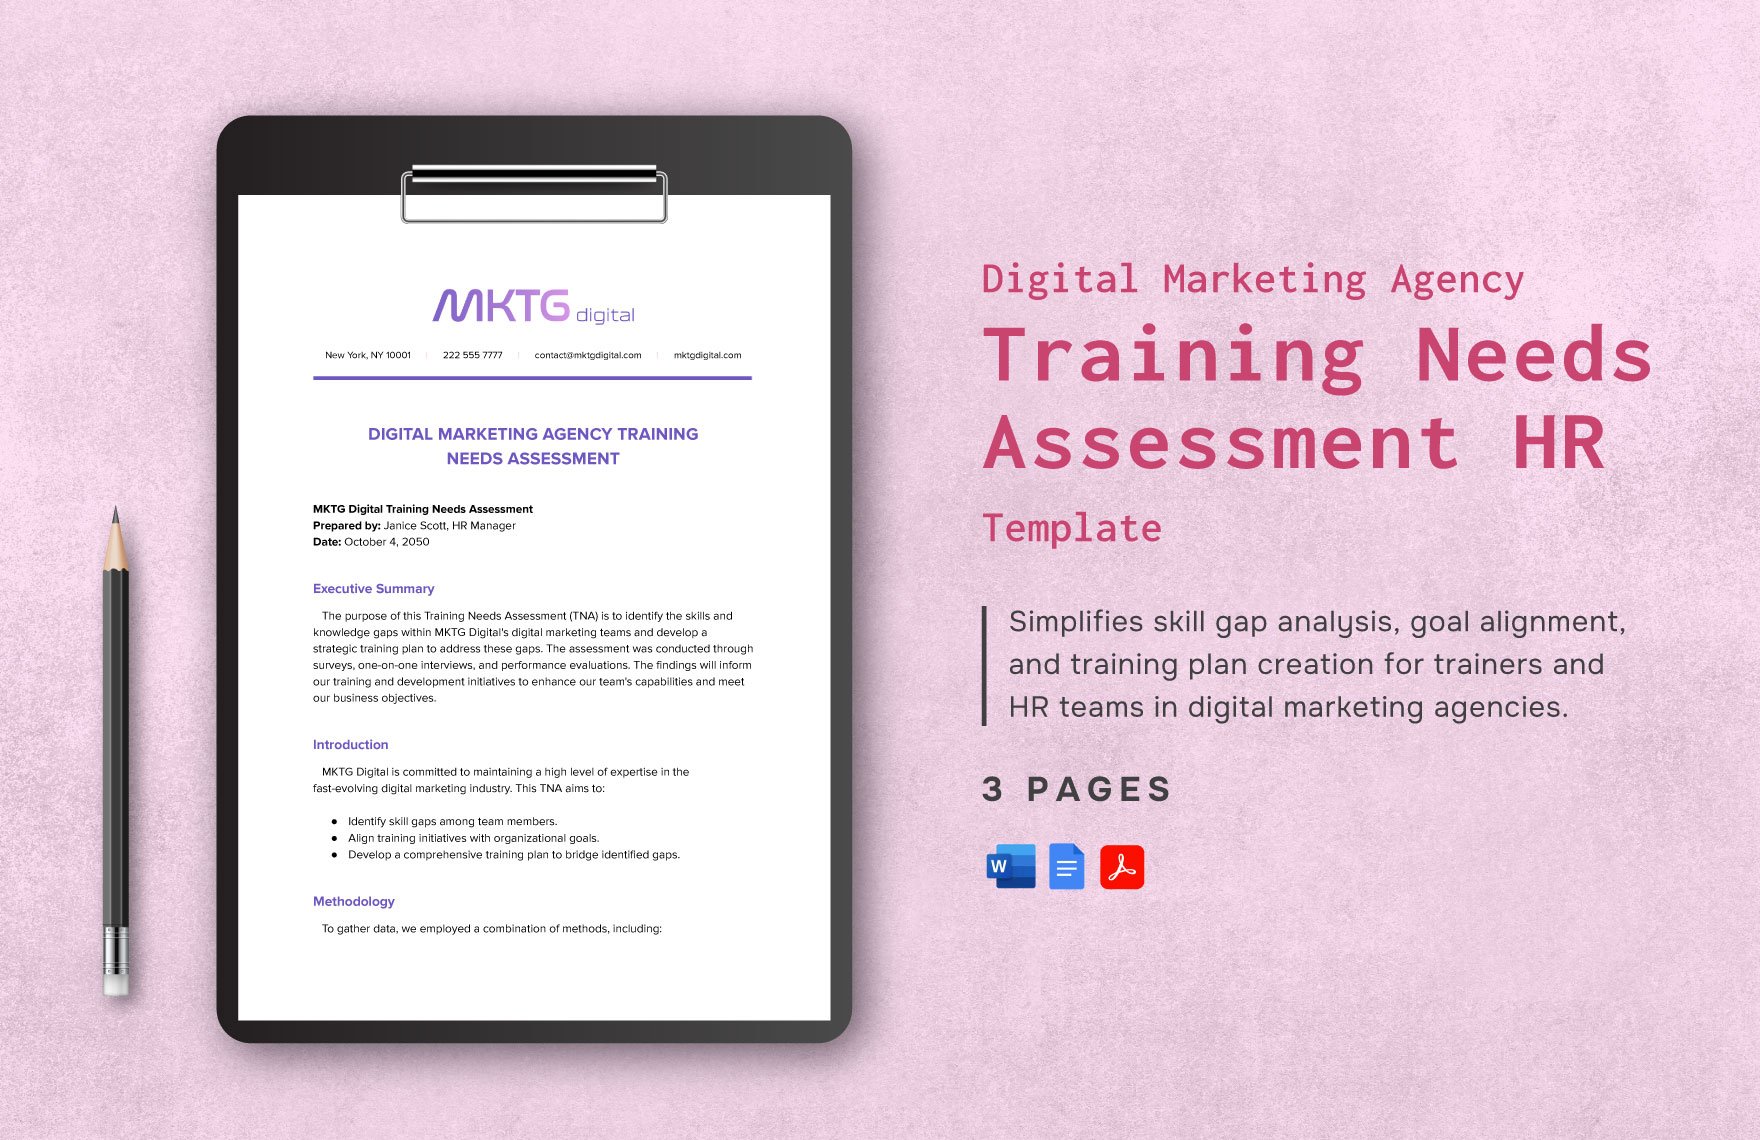 Digital Marketing Agency Training Needs Assessment HR Template